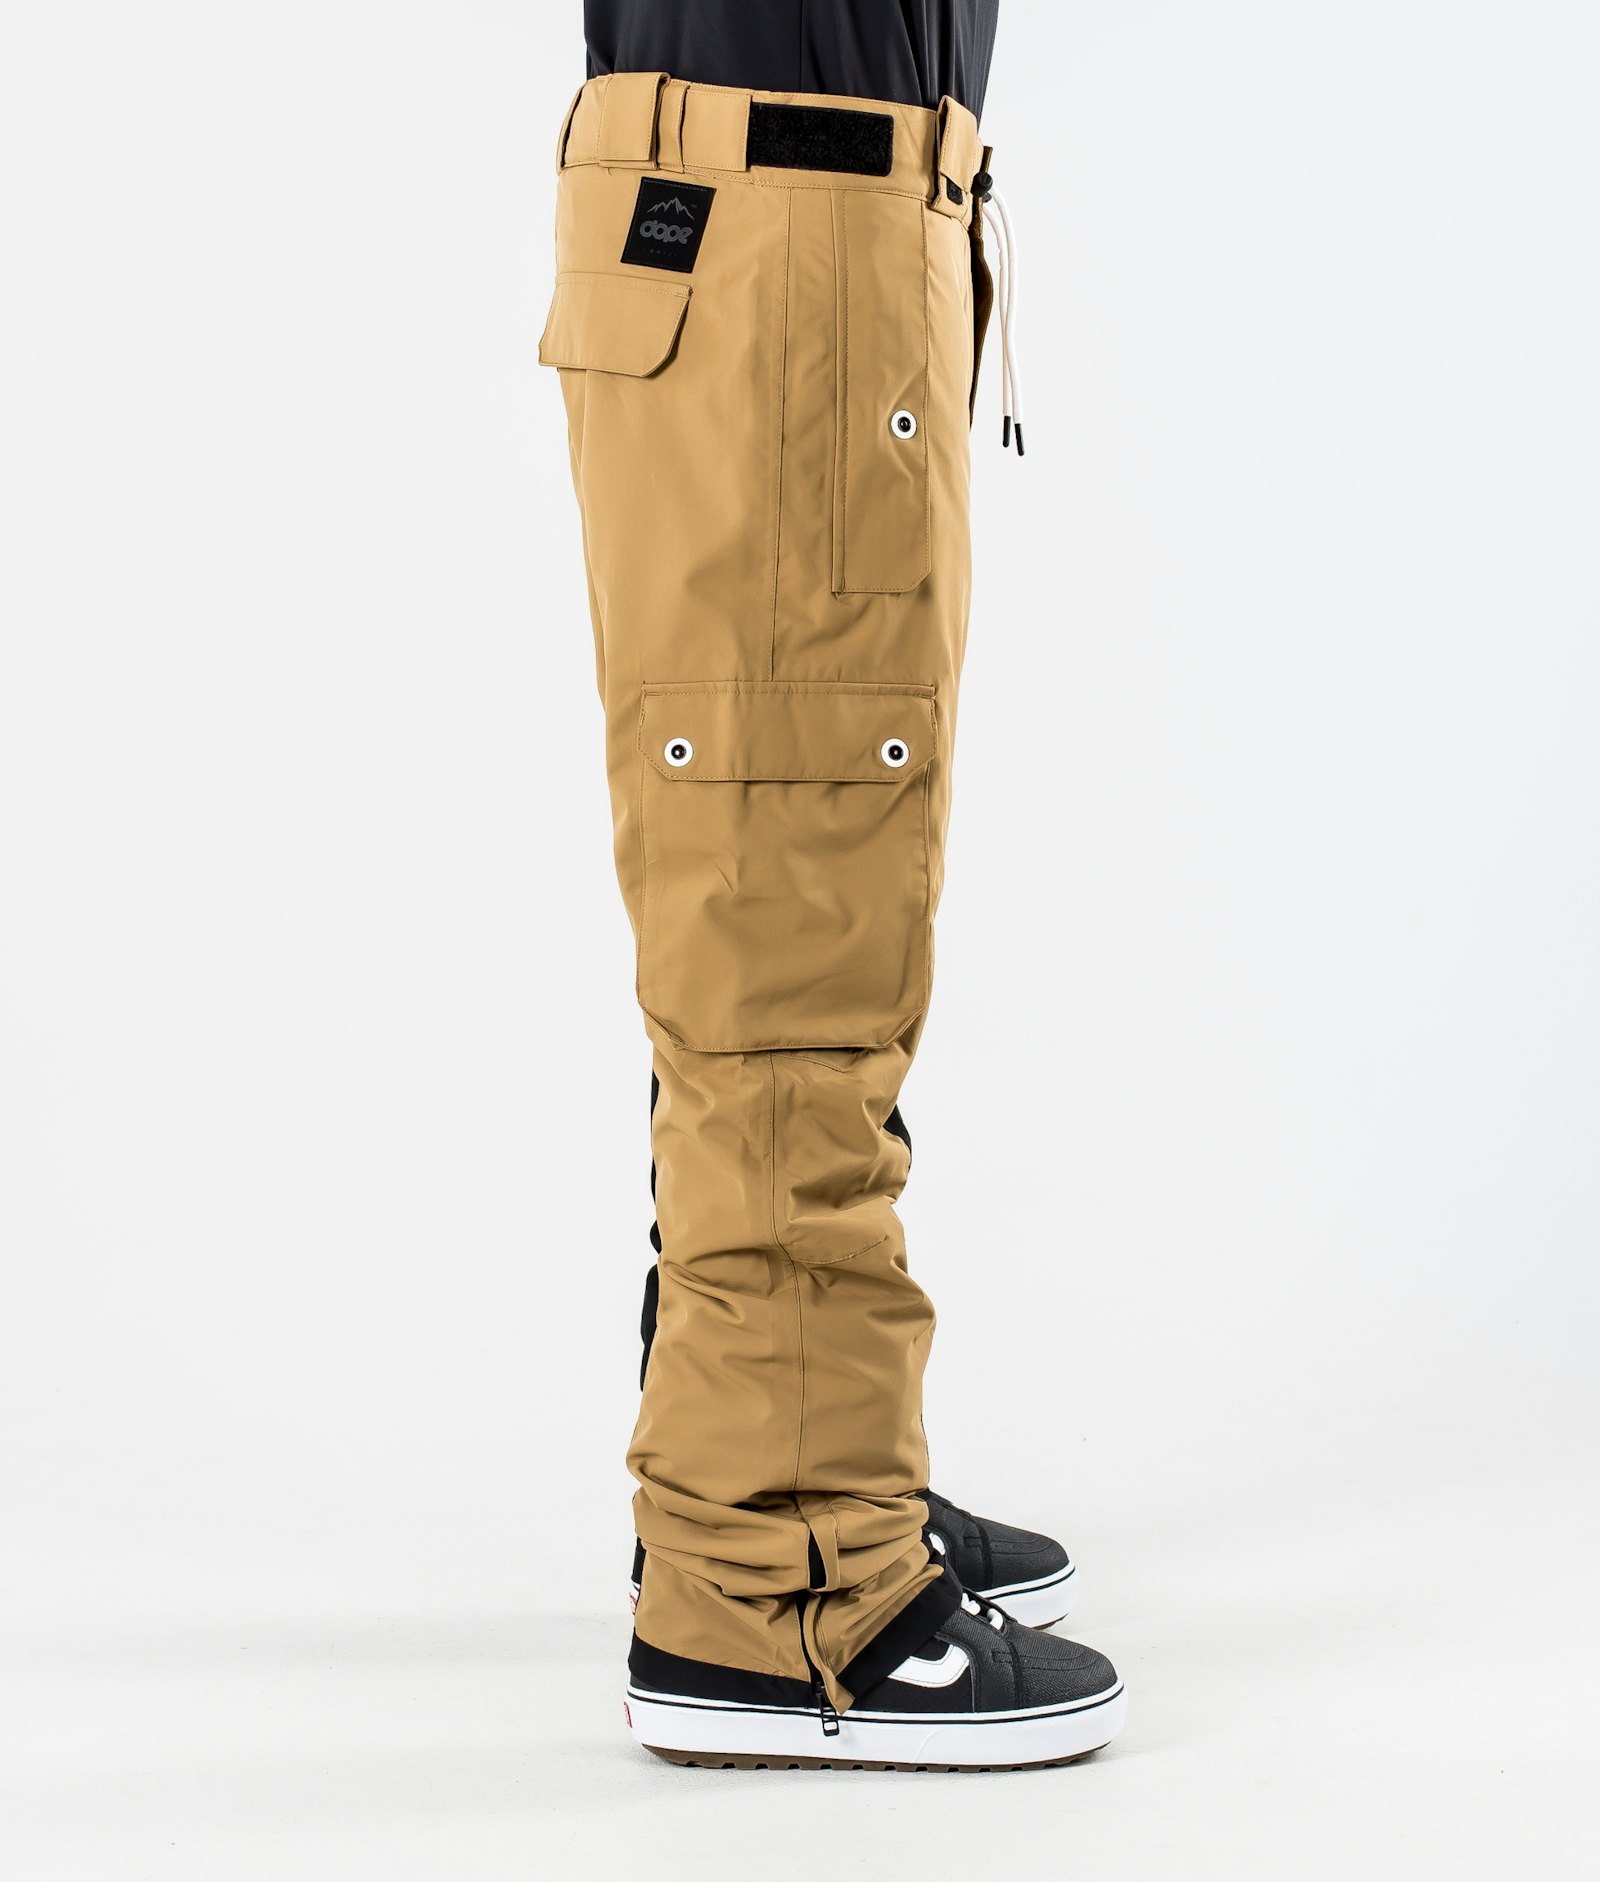 Adept 2020 Snowboard Pants Men Gold/Black